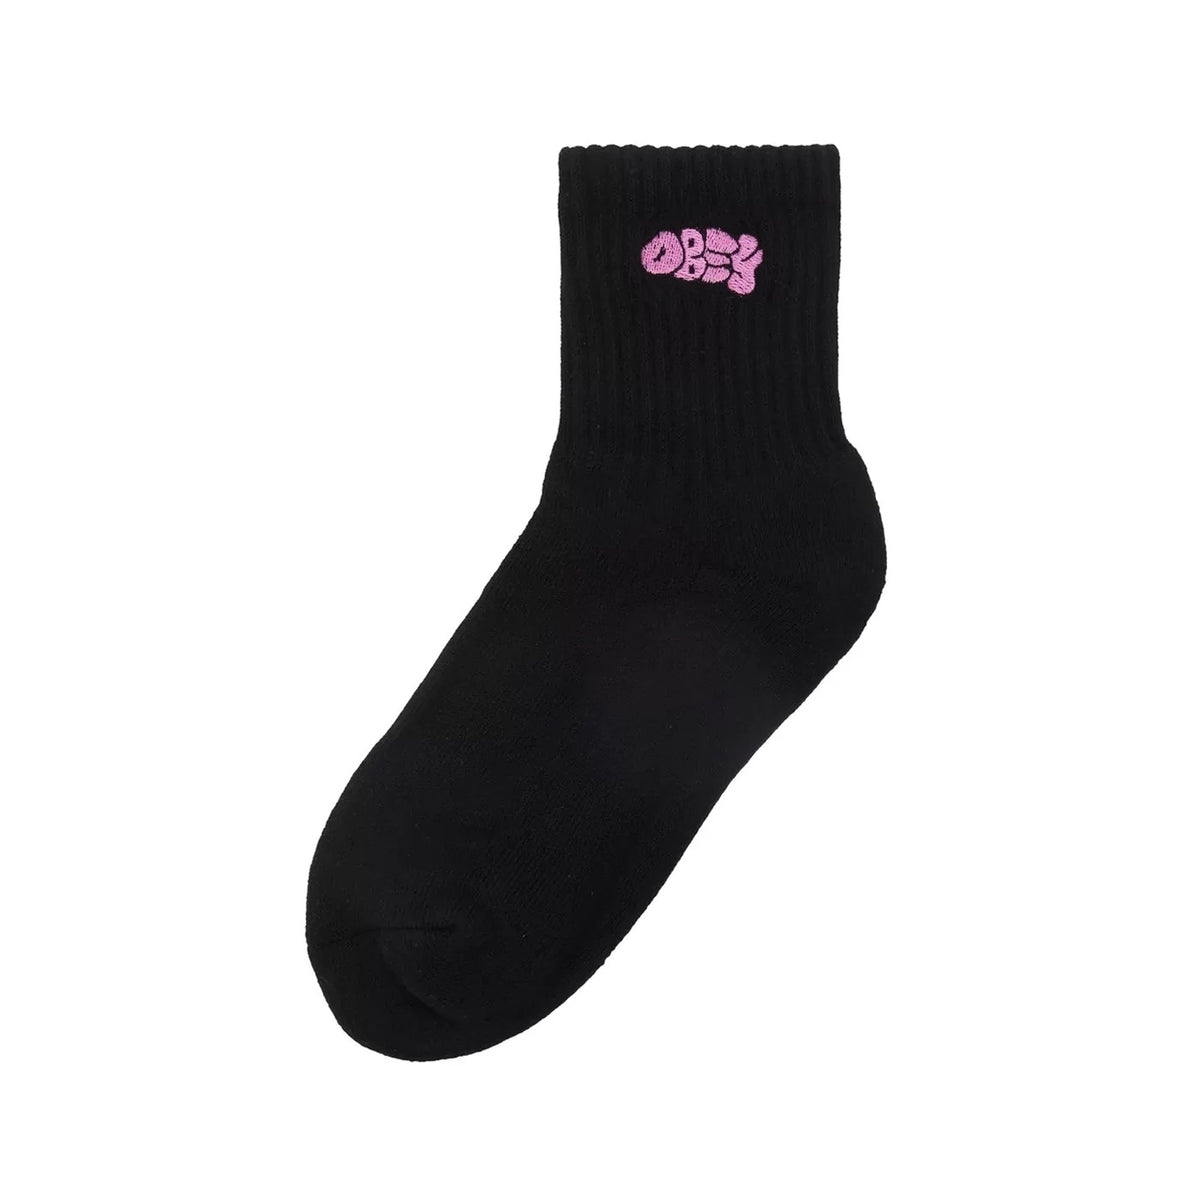 OBEY - Graffiti Women's Socks, Black